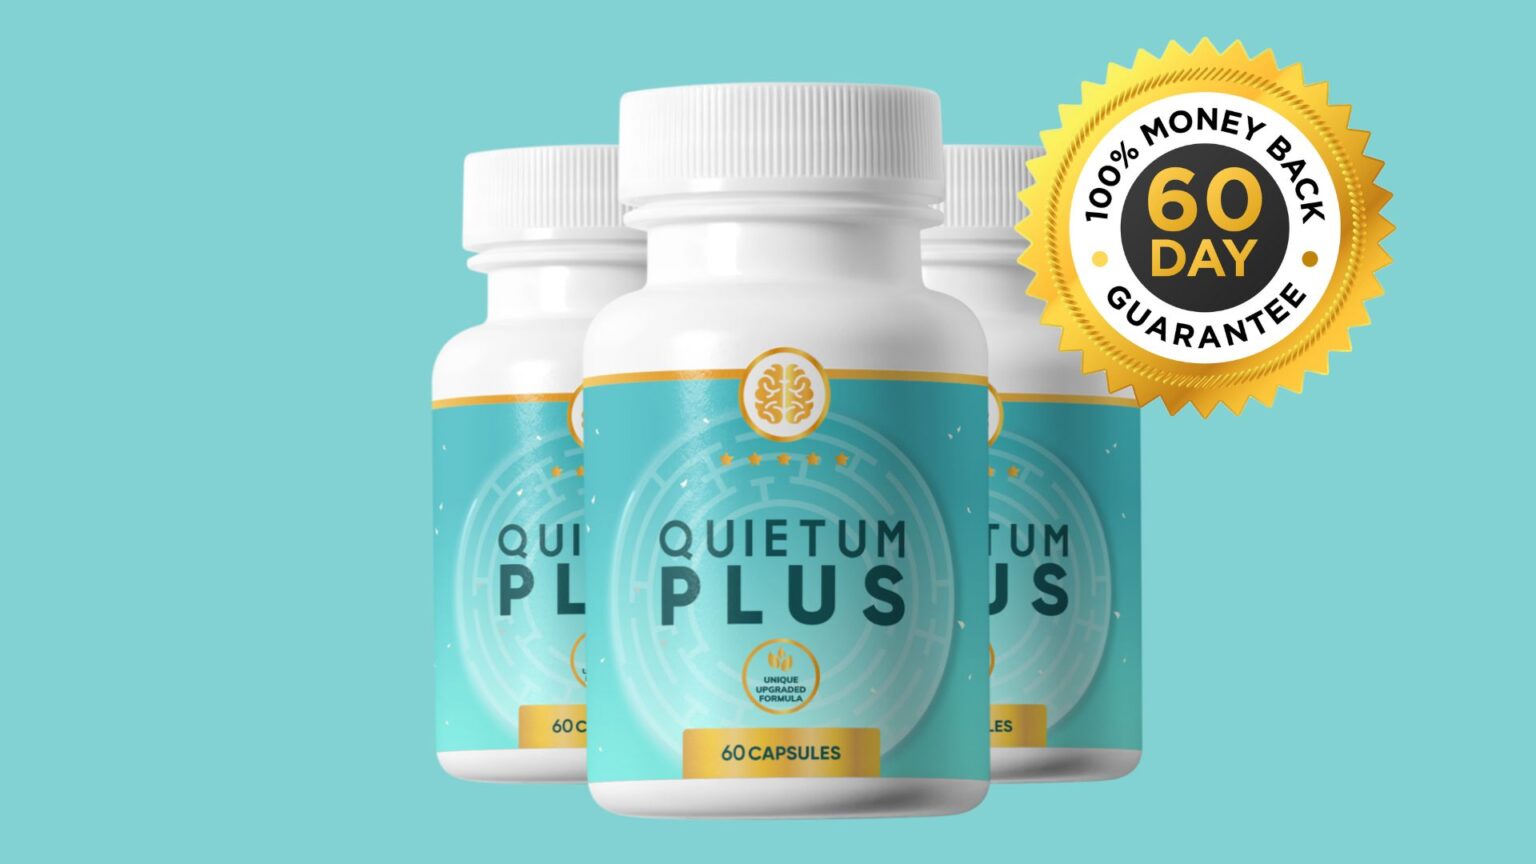 Where To Buy Quietum Plus